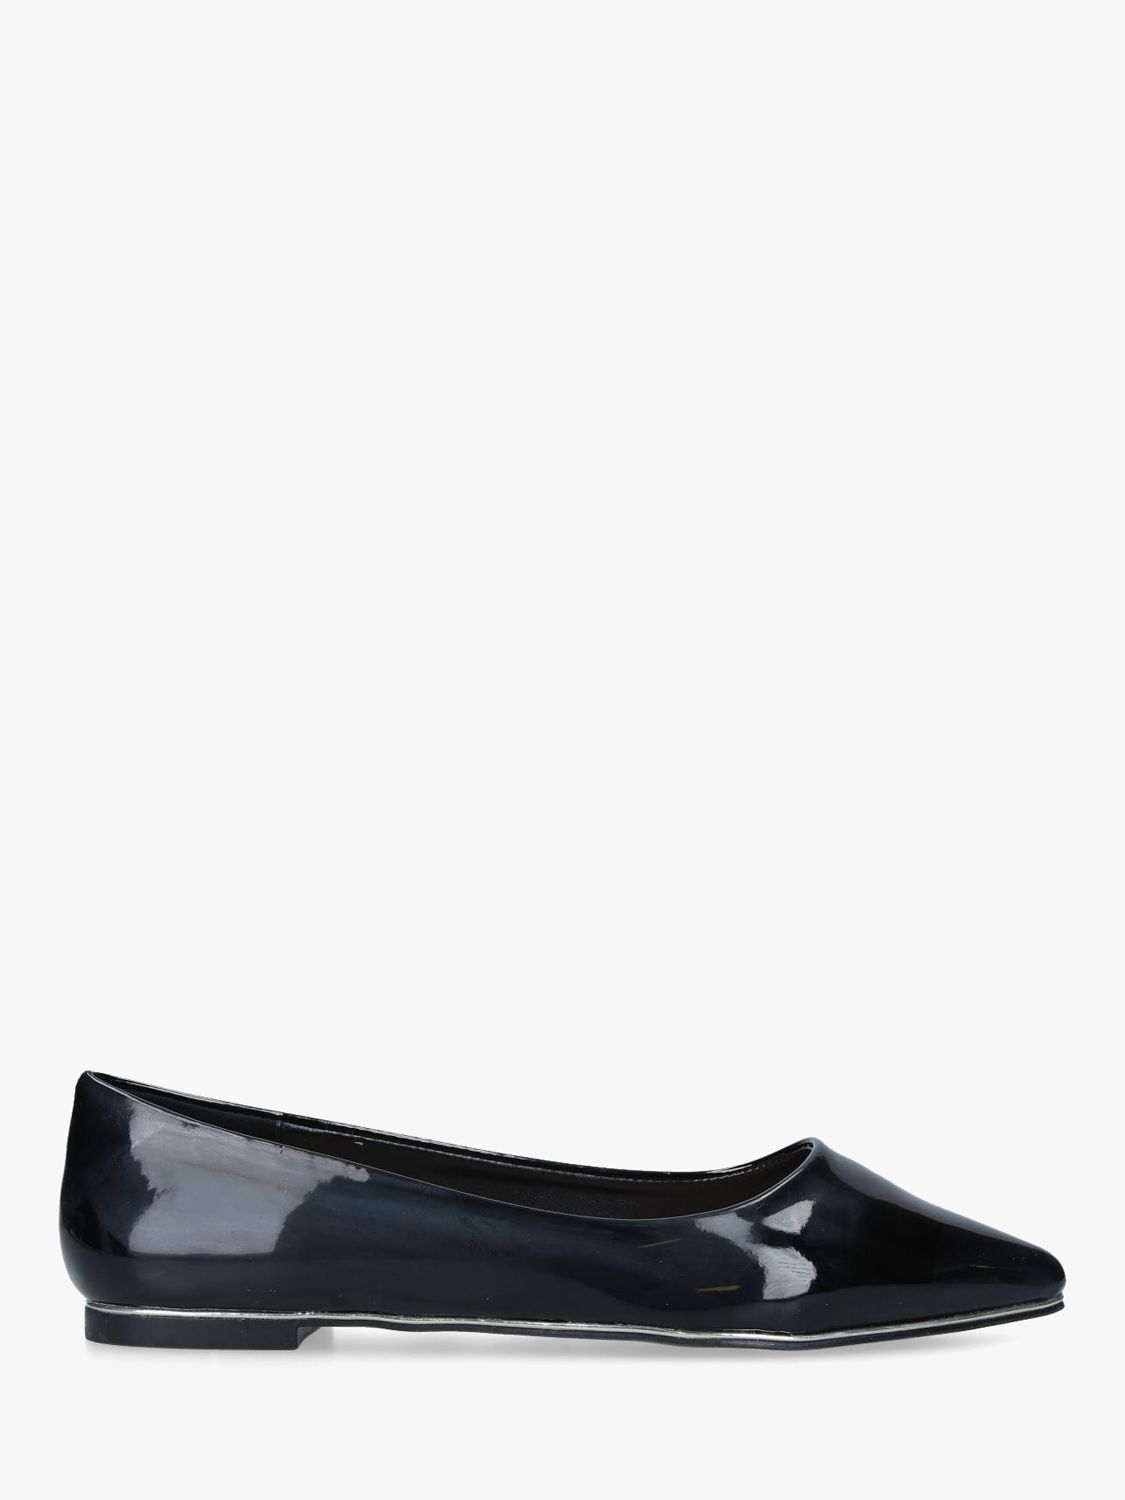 carvela flat black shoes